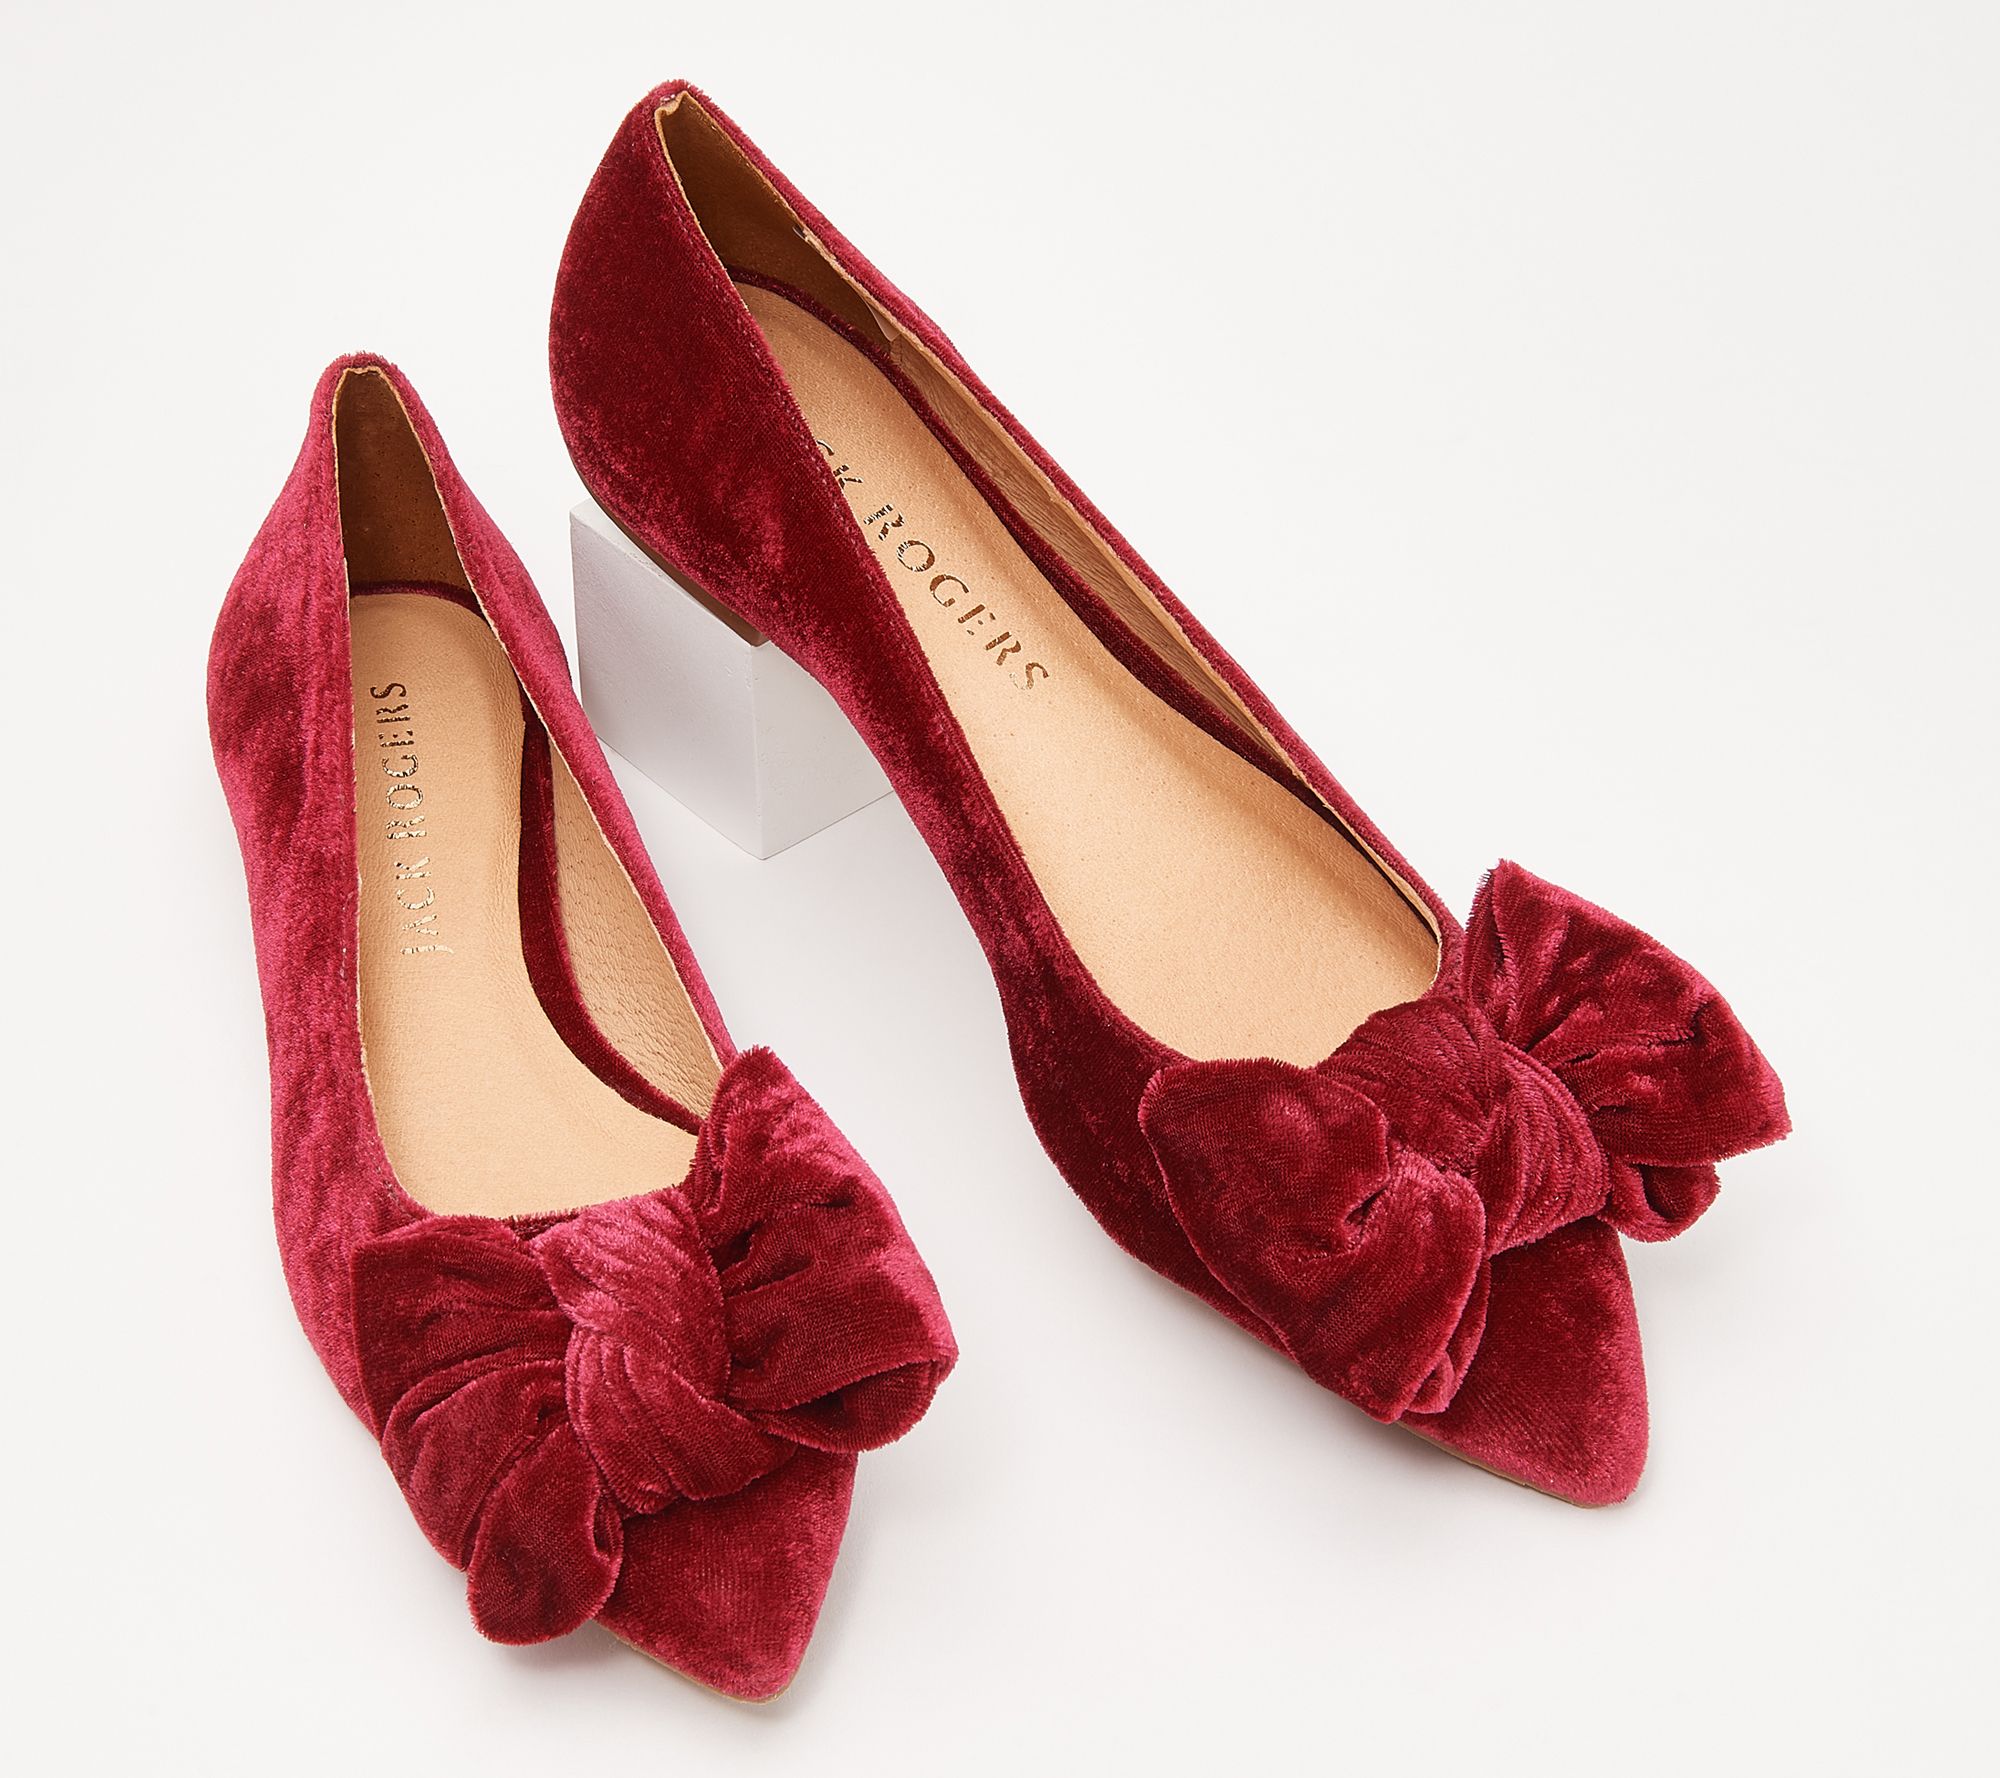 Luxury Women's Vintage Velvet High Heels Jewel Rhinestone T Strap  Sandal Shoes